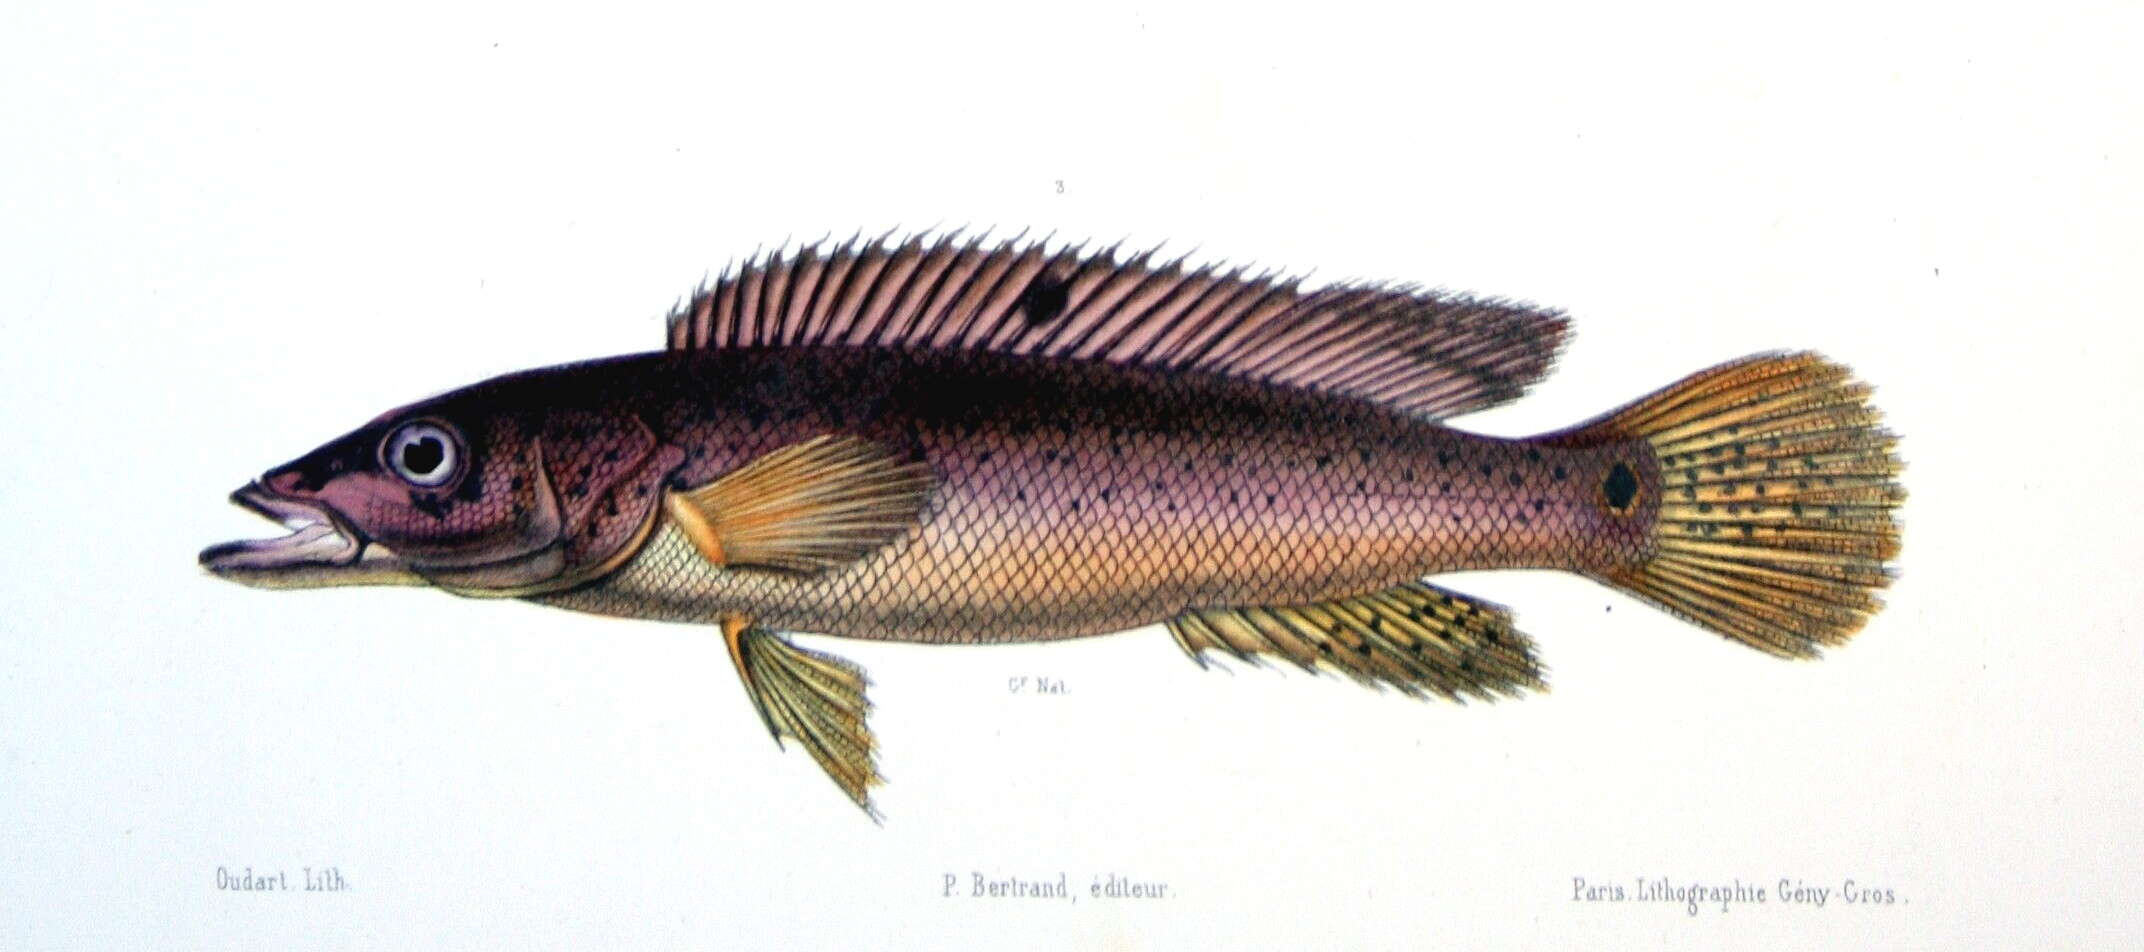 Image of Pike cichlid